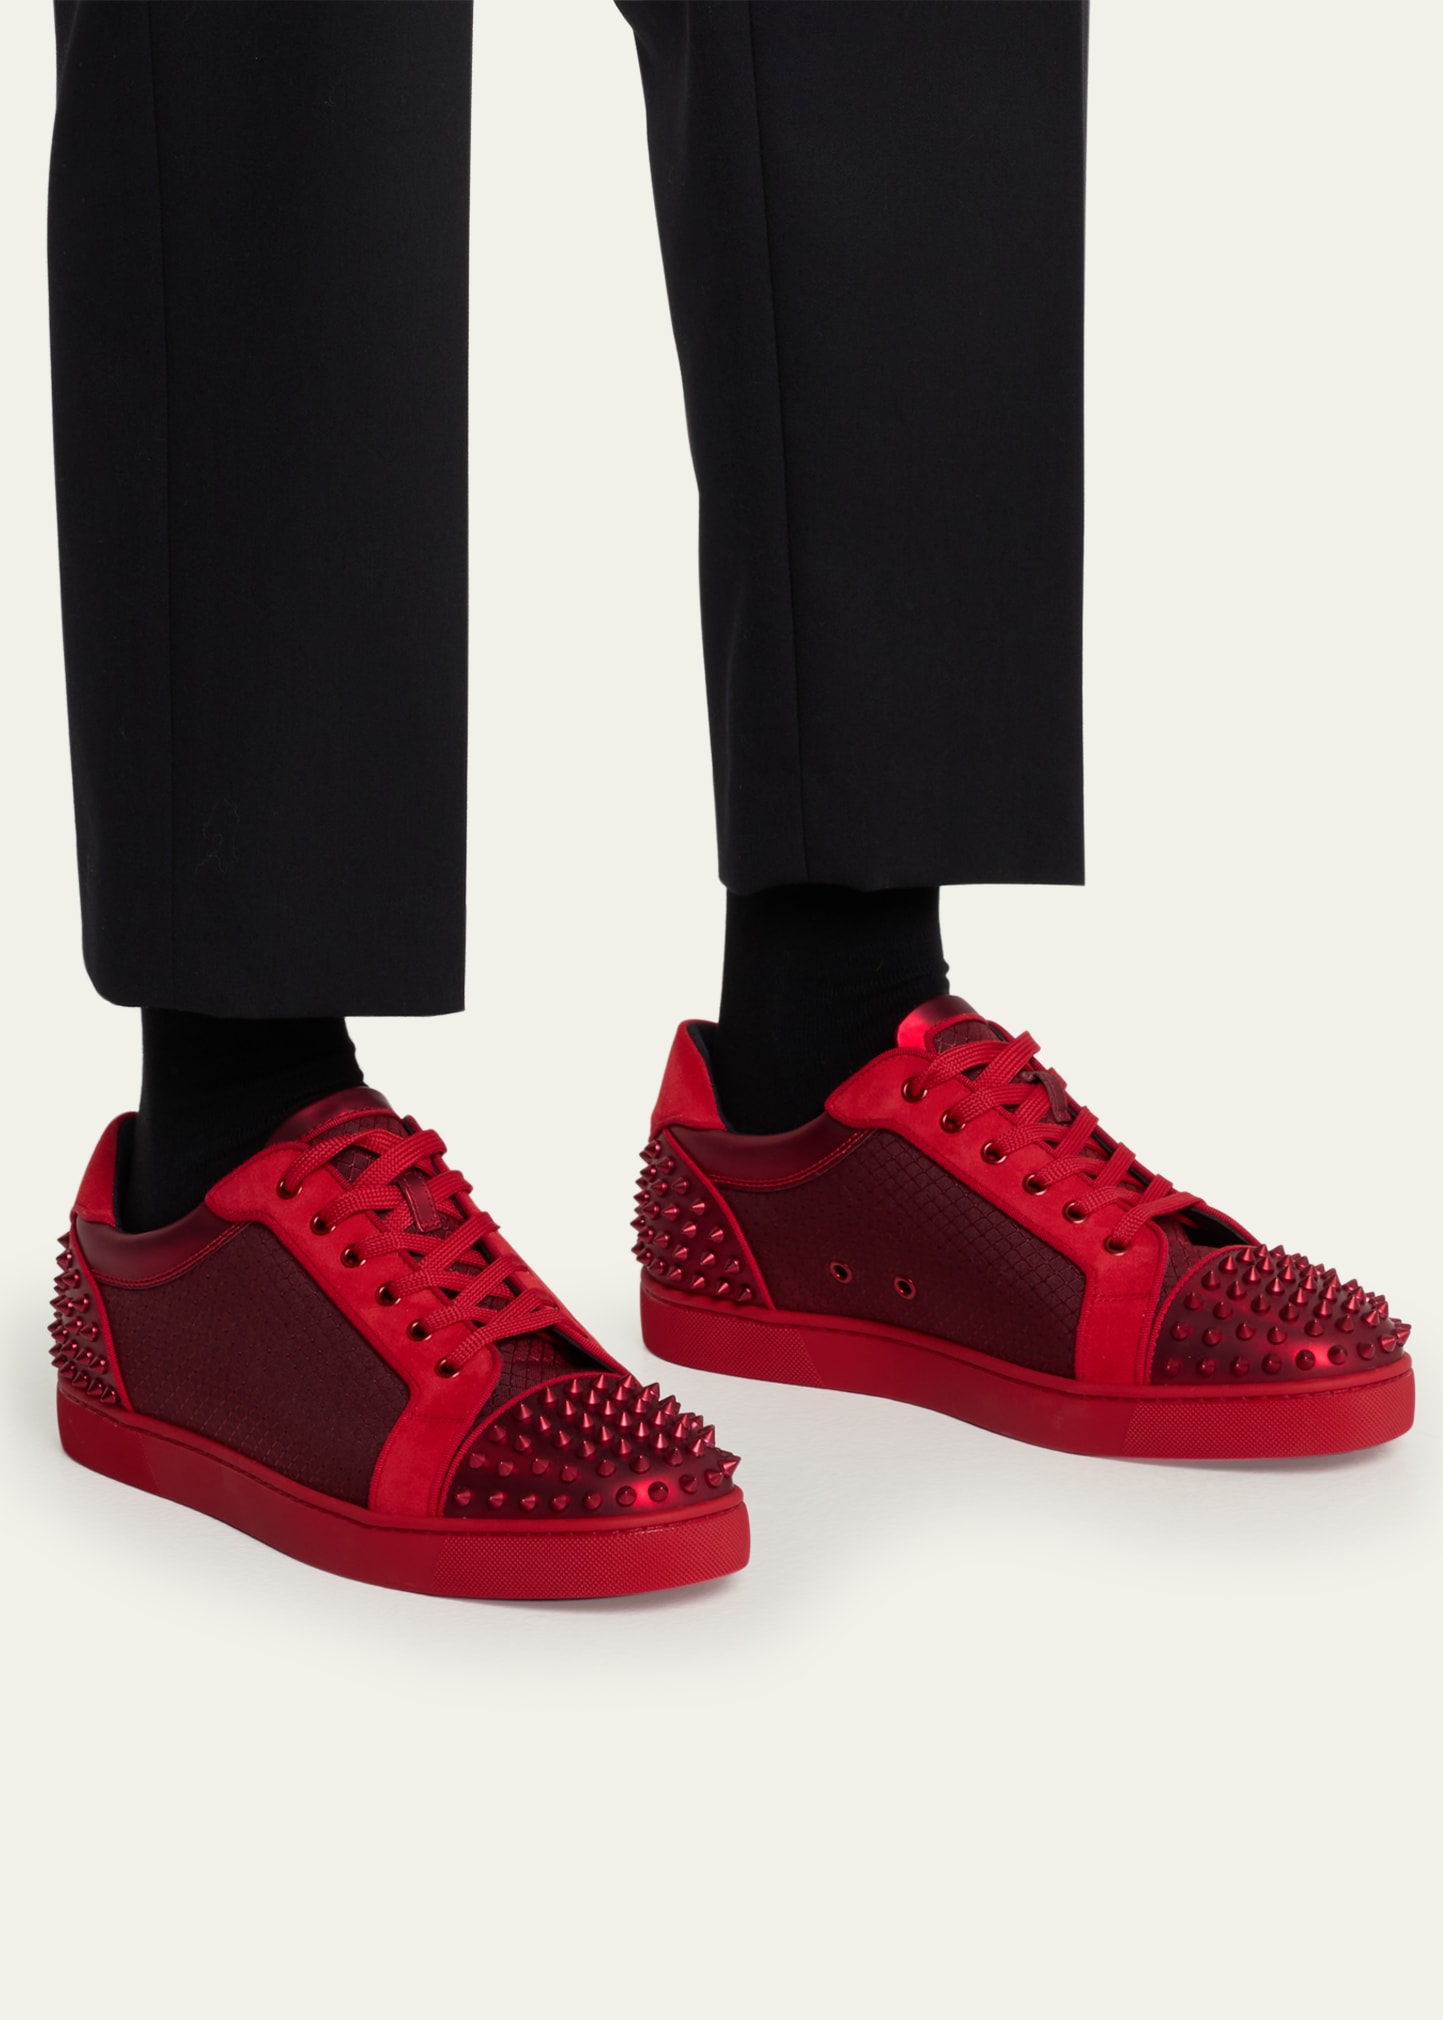 Christian Louboutin Shoes and Heels at Bergdorf Goodman